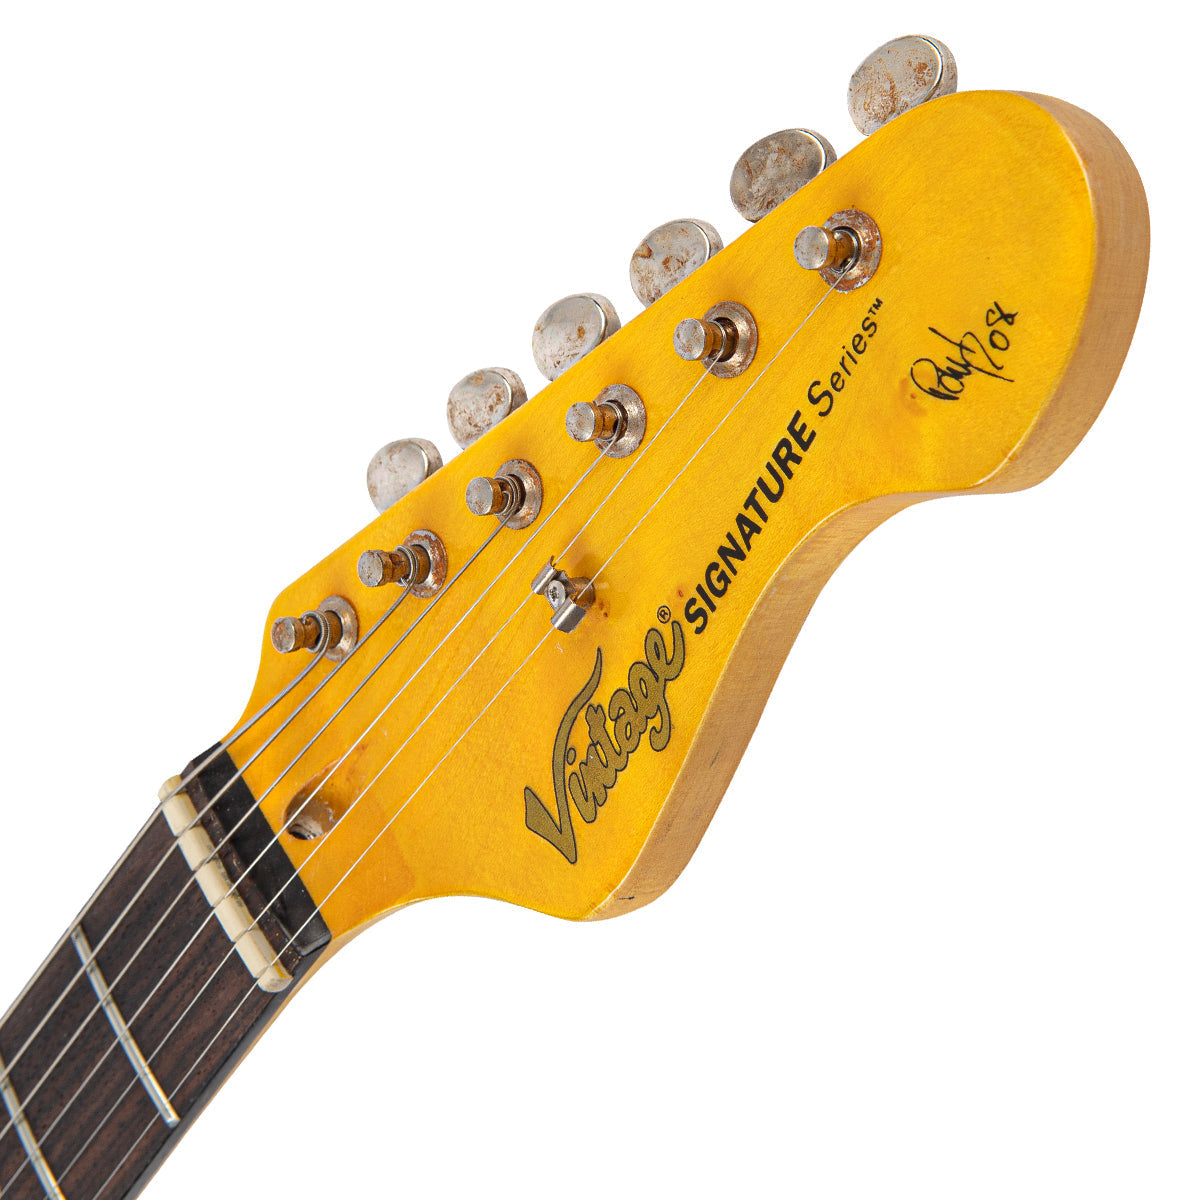 Vintage V6 Paul Rose Signature Electric Guitar ~ Distressed Sunset Sunburst, Electric Guitar for sale at Richards Guitars.